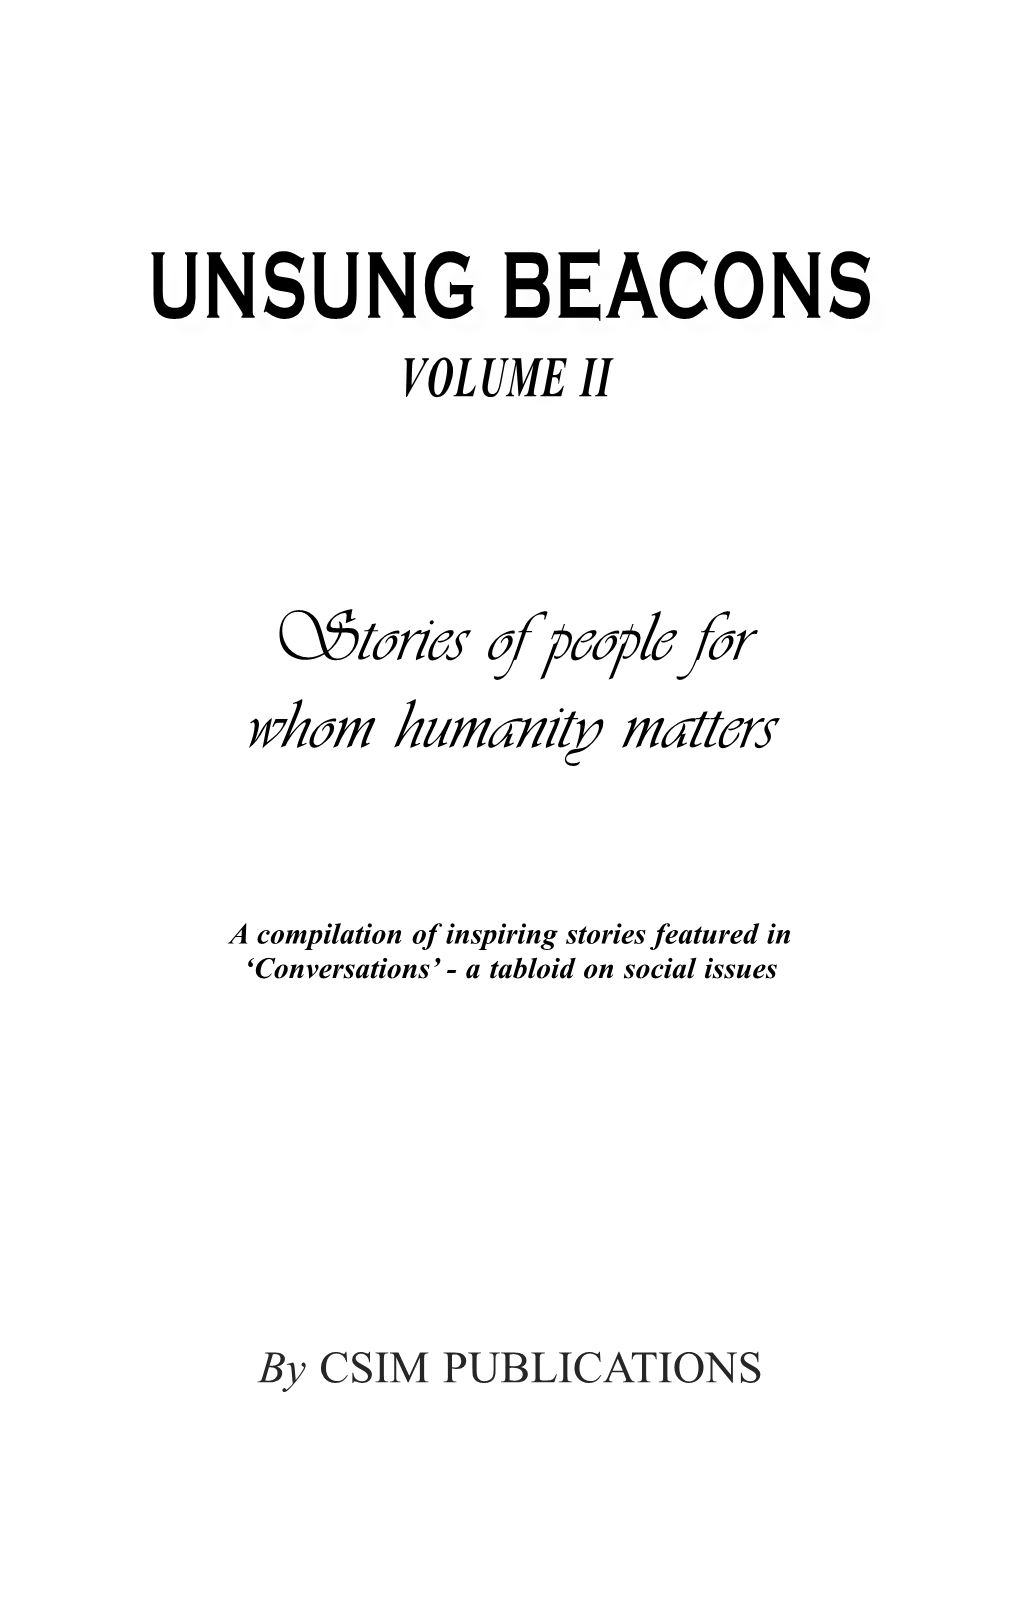 Unsung Beacons Volume II